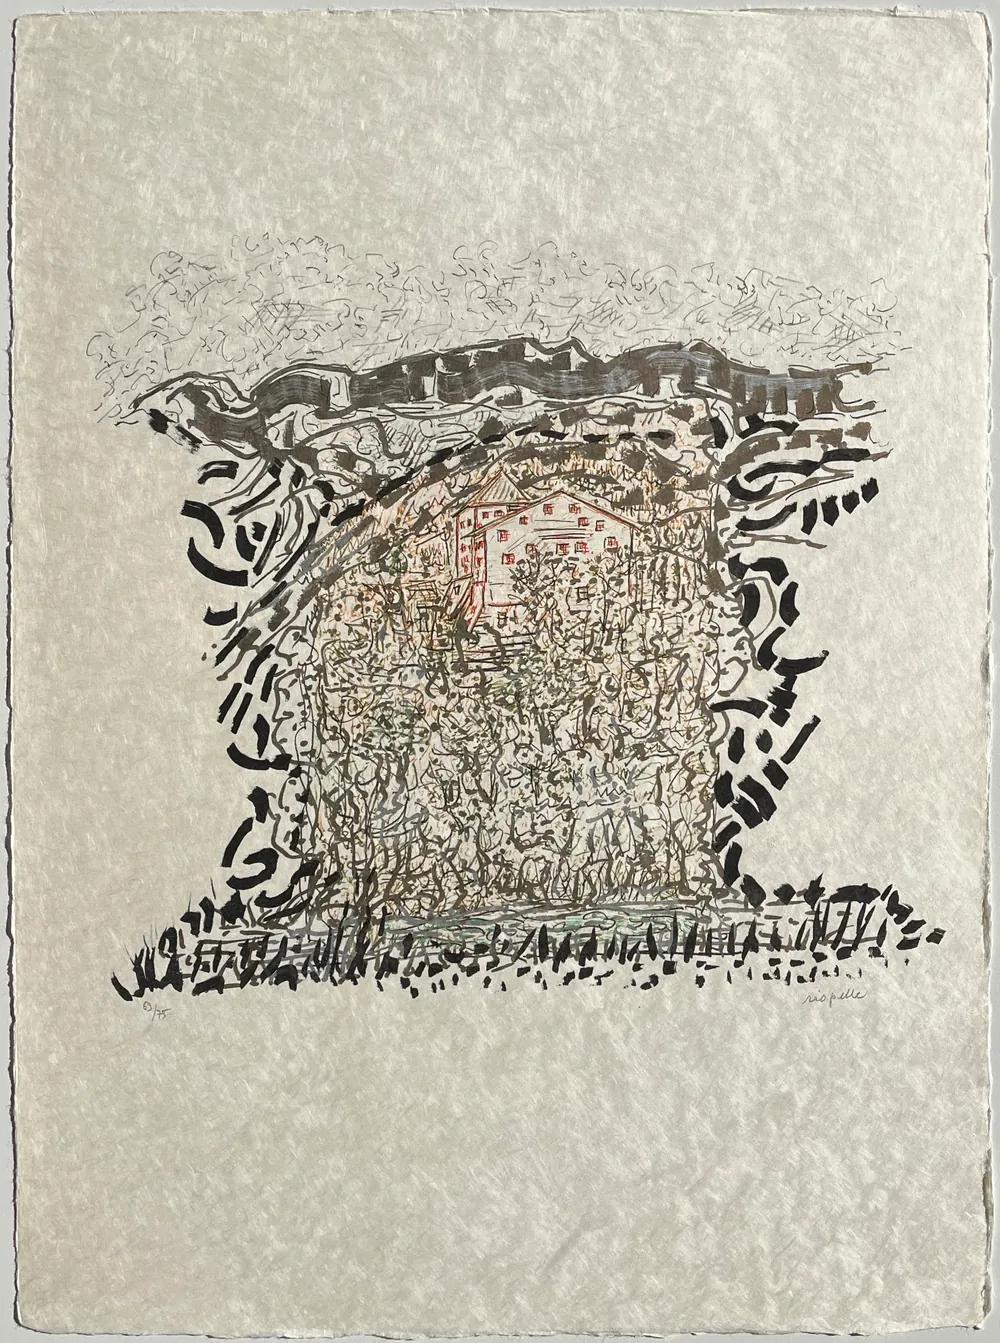 Jean-Paul Riopelle Abstract Print - Caldès